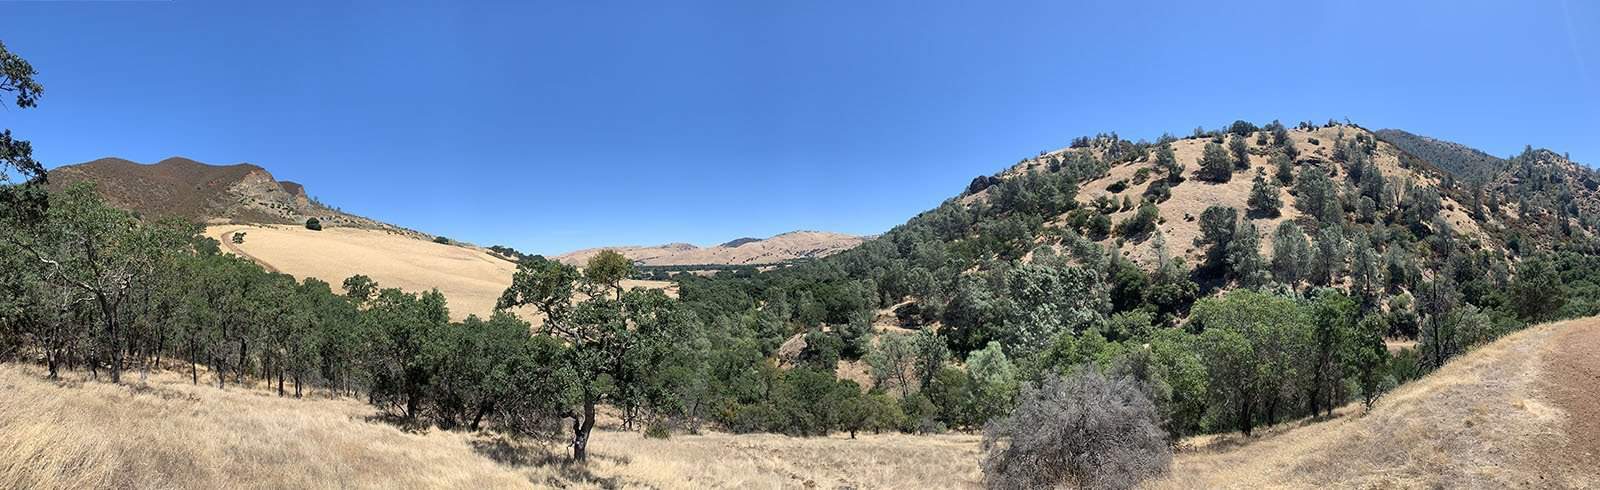 Mount Diablo oaks and pines